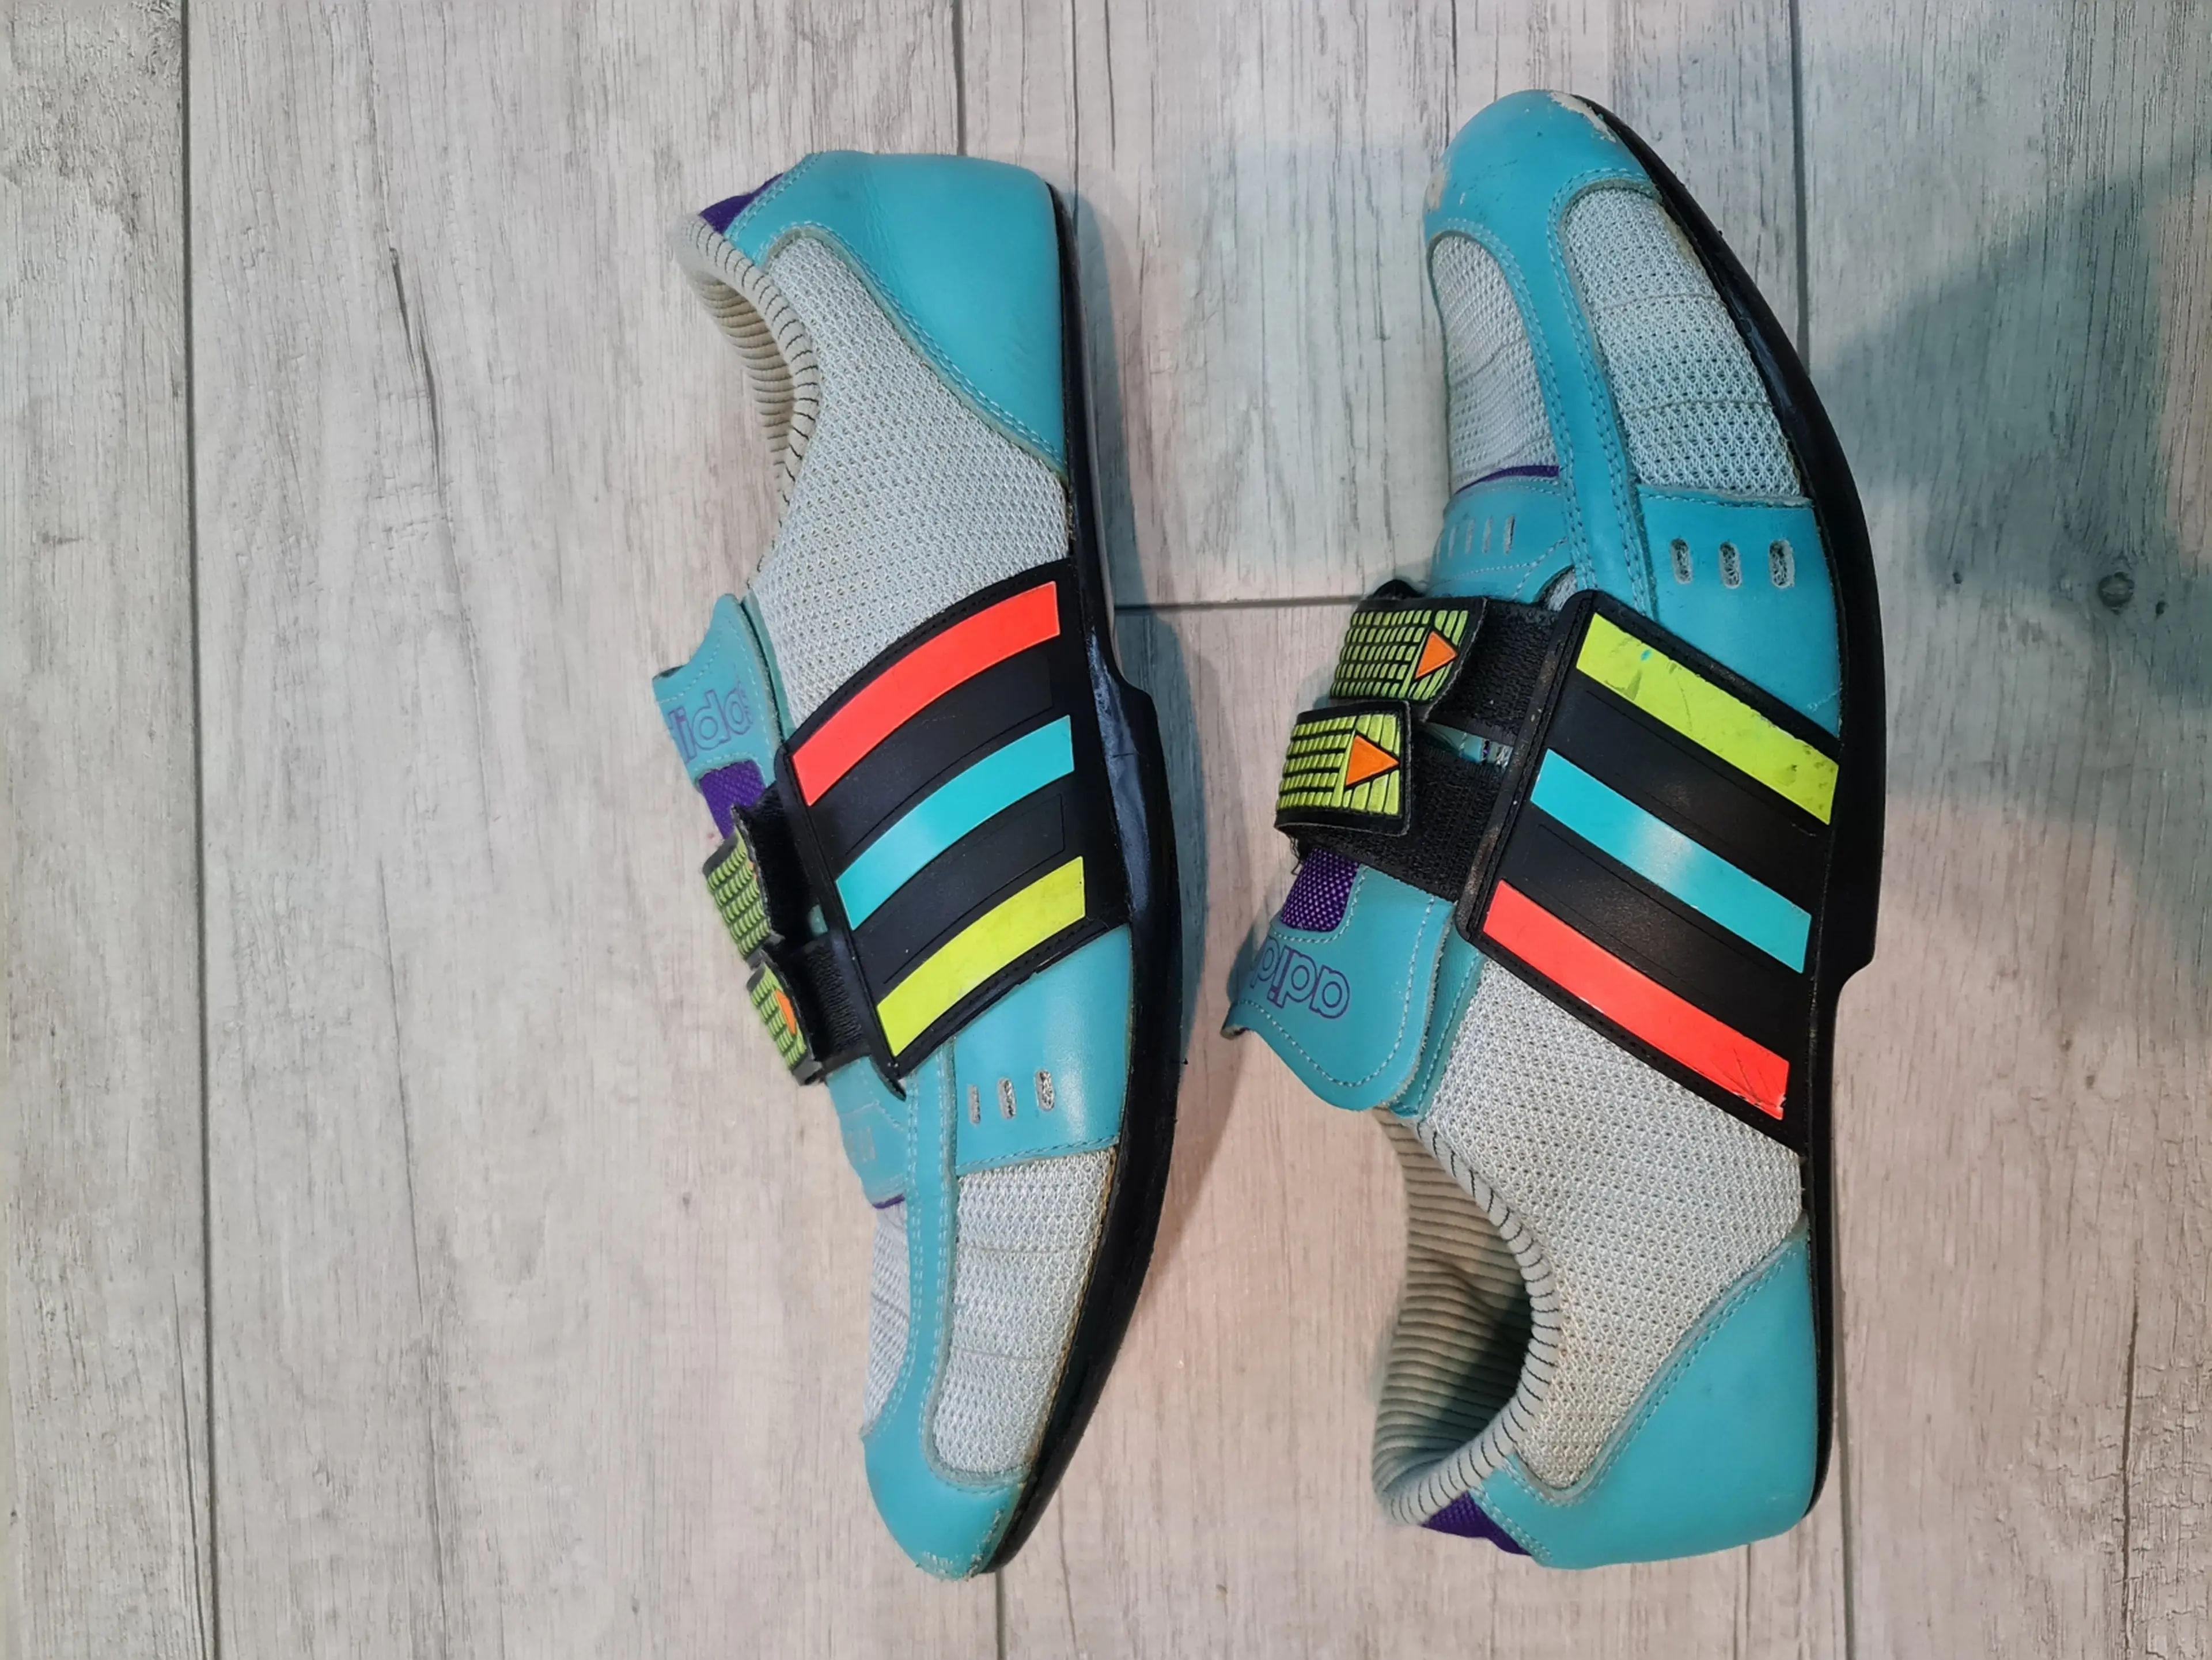 6. Vand pantofi cursiera Adidas Eddy Merckx PRO Turquoise